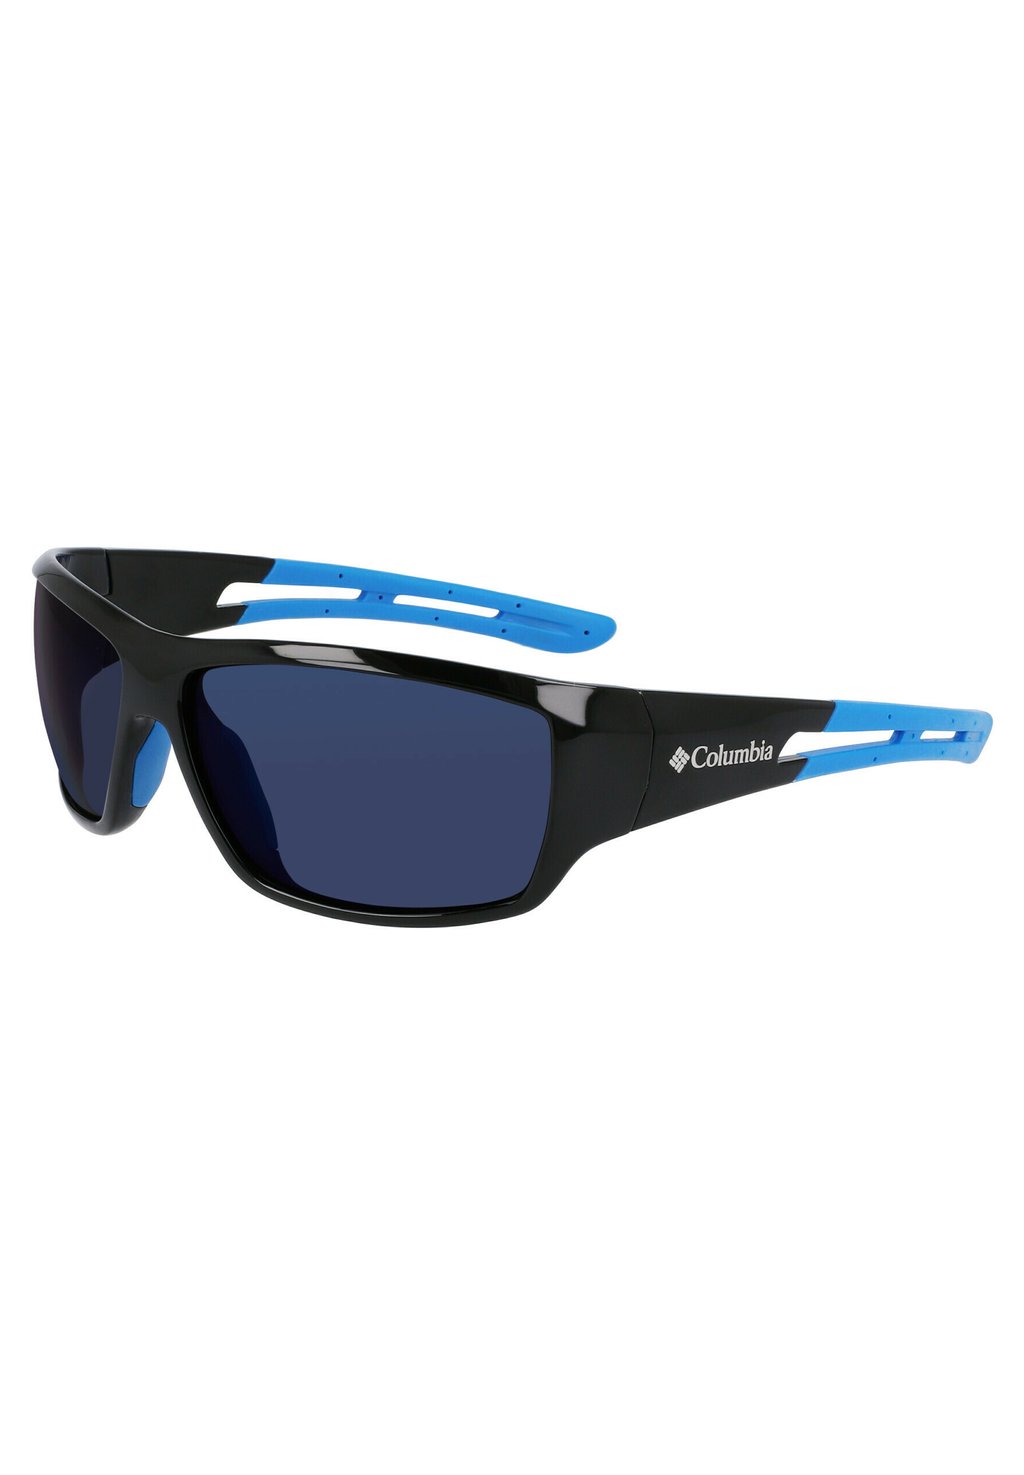 Солнцезащитные очки UTILIZER Columbia, цвет shiny black/blue blue mirror